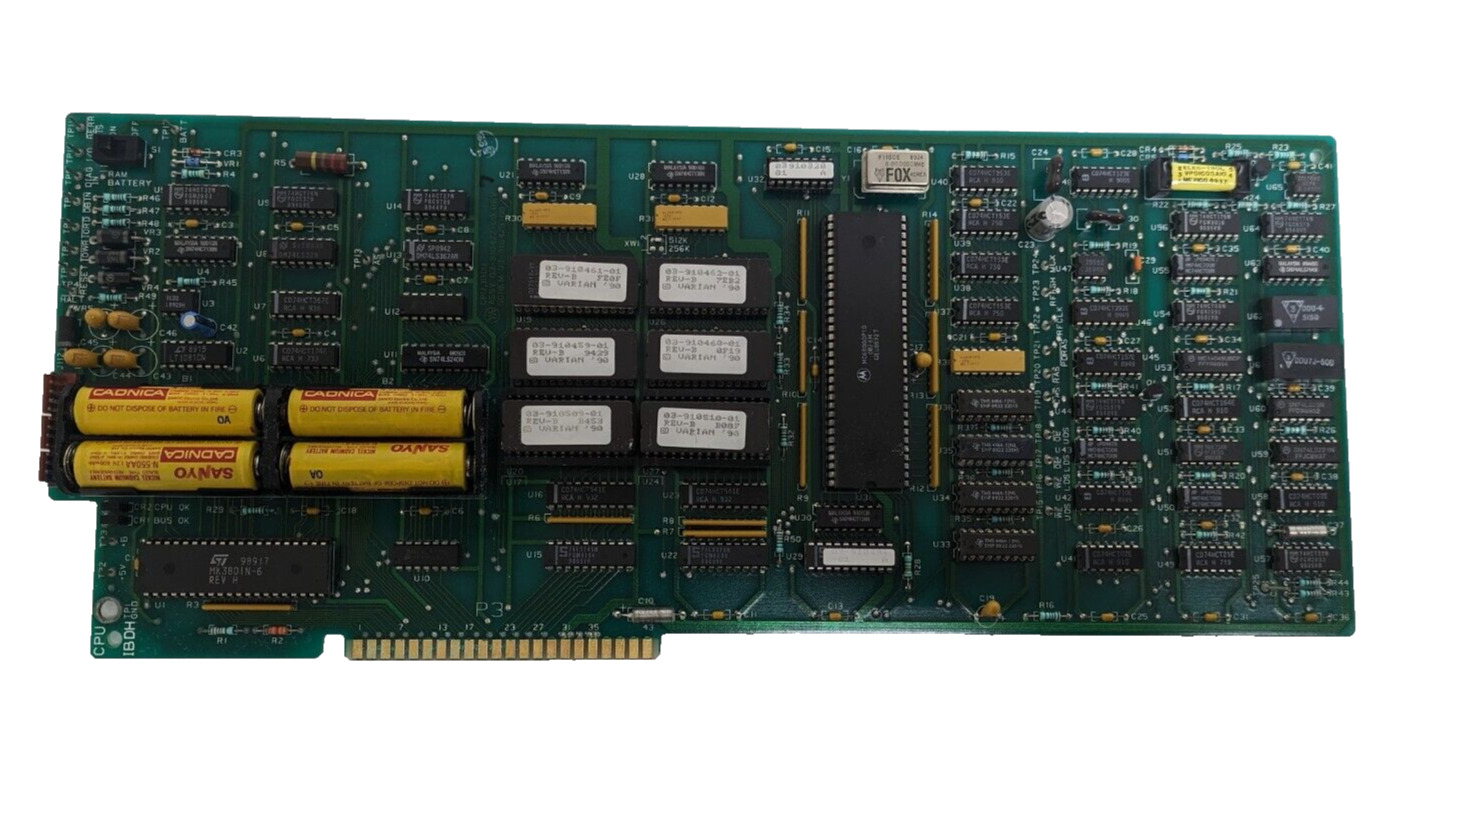 Varian 03-918422-00 CPU IBDH Motherboard for Varian Star 3400 GC